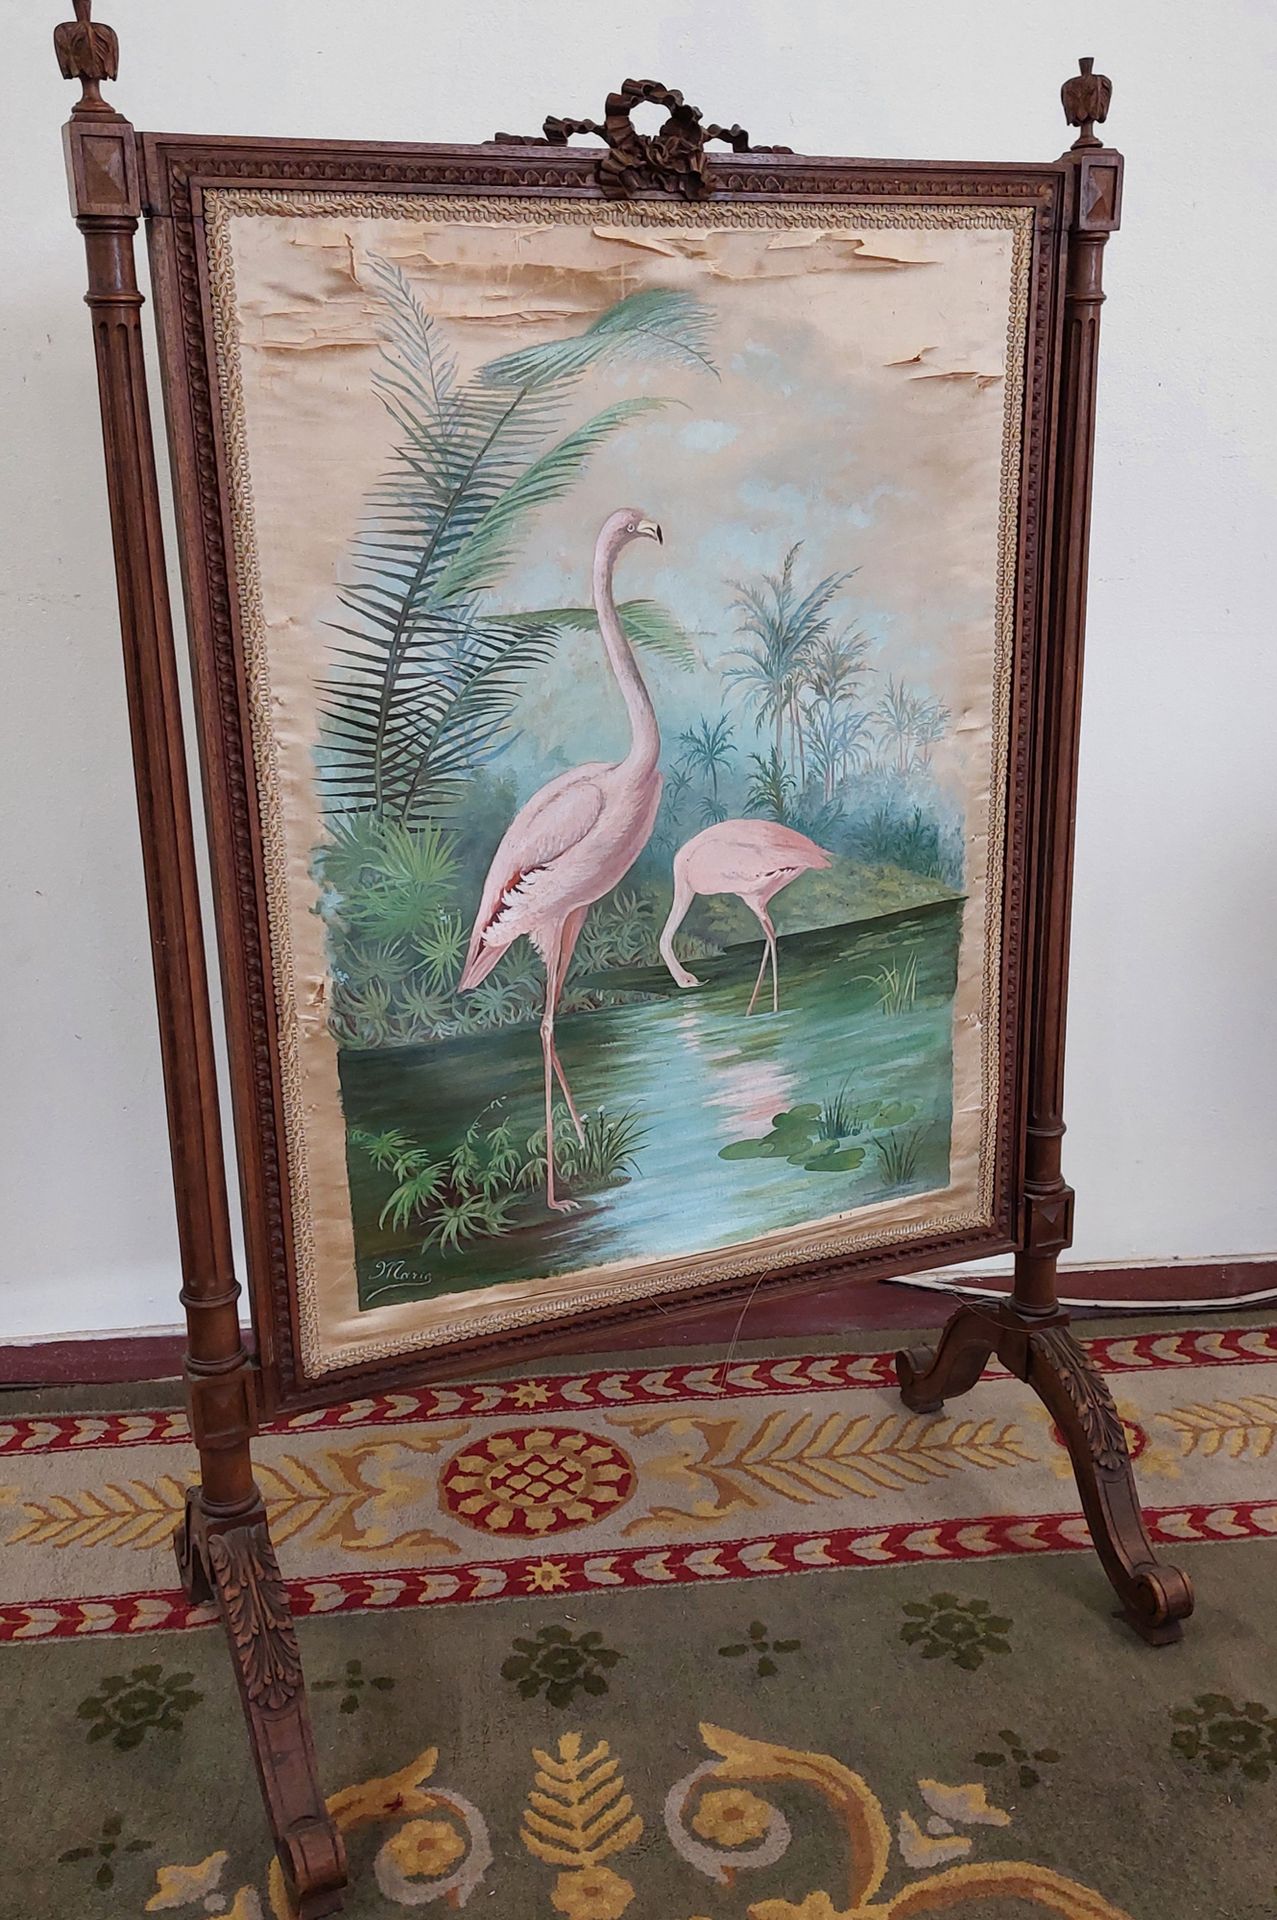 Null 雕刻的木制火炉屏风

路易十六风格

画在丝绸上的粉红色火烈鸟，署名玛丽

高：109厘米

(损坏的丝绸)